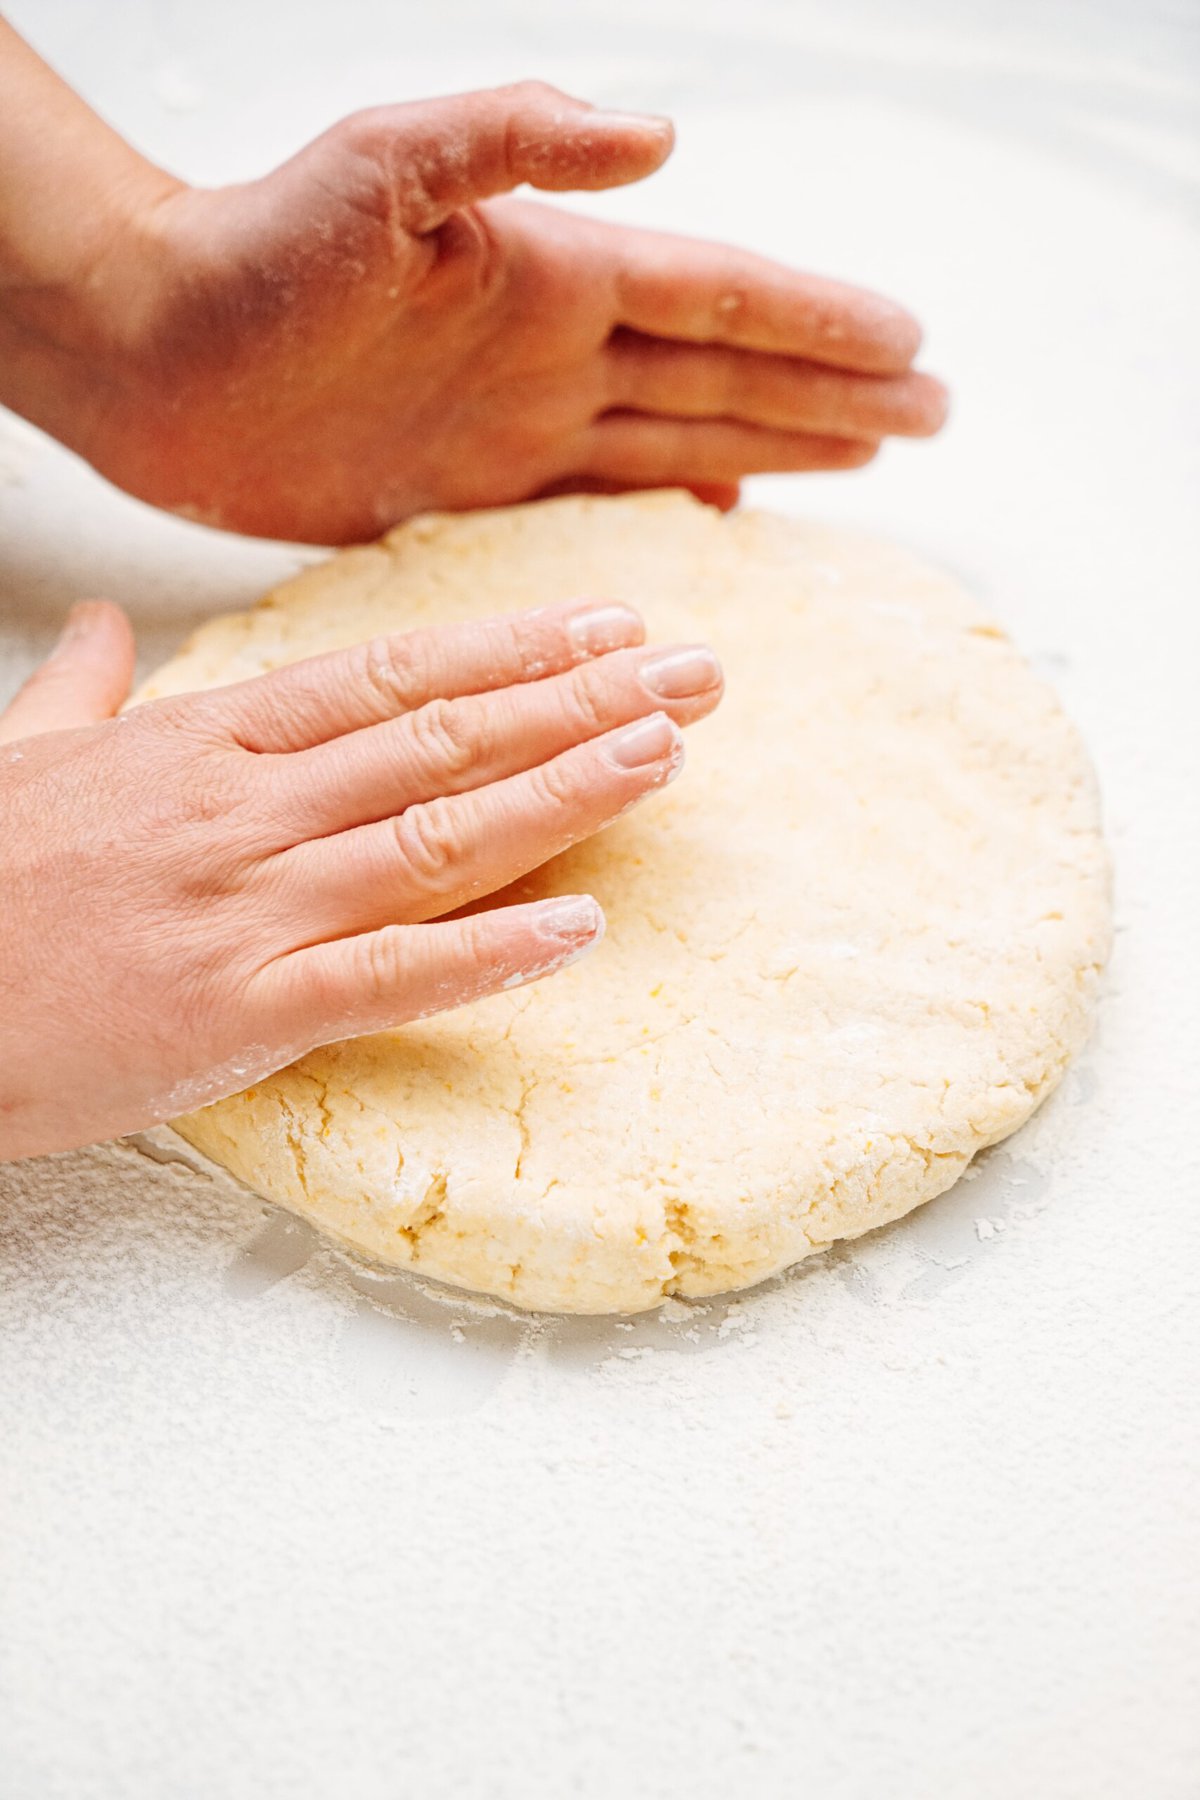 a person shaping scone dough into a circle